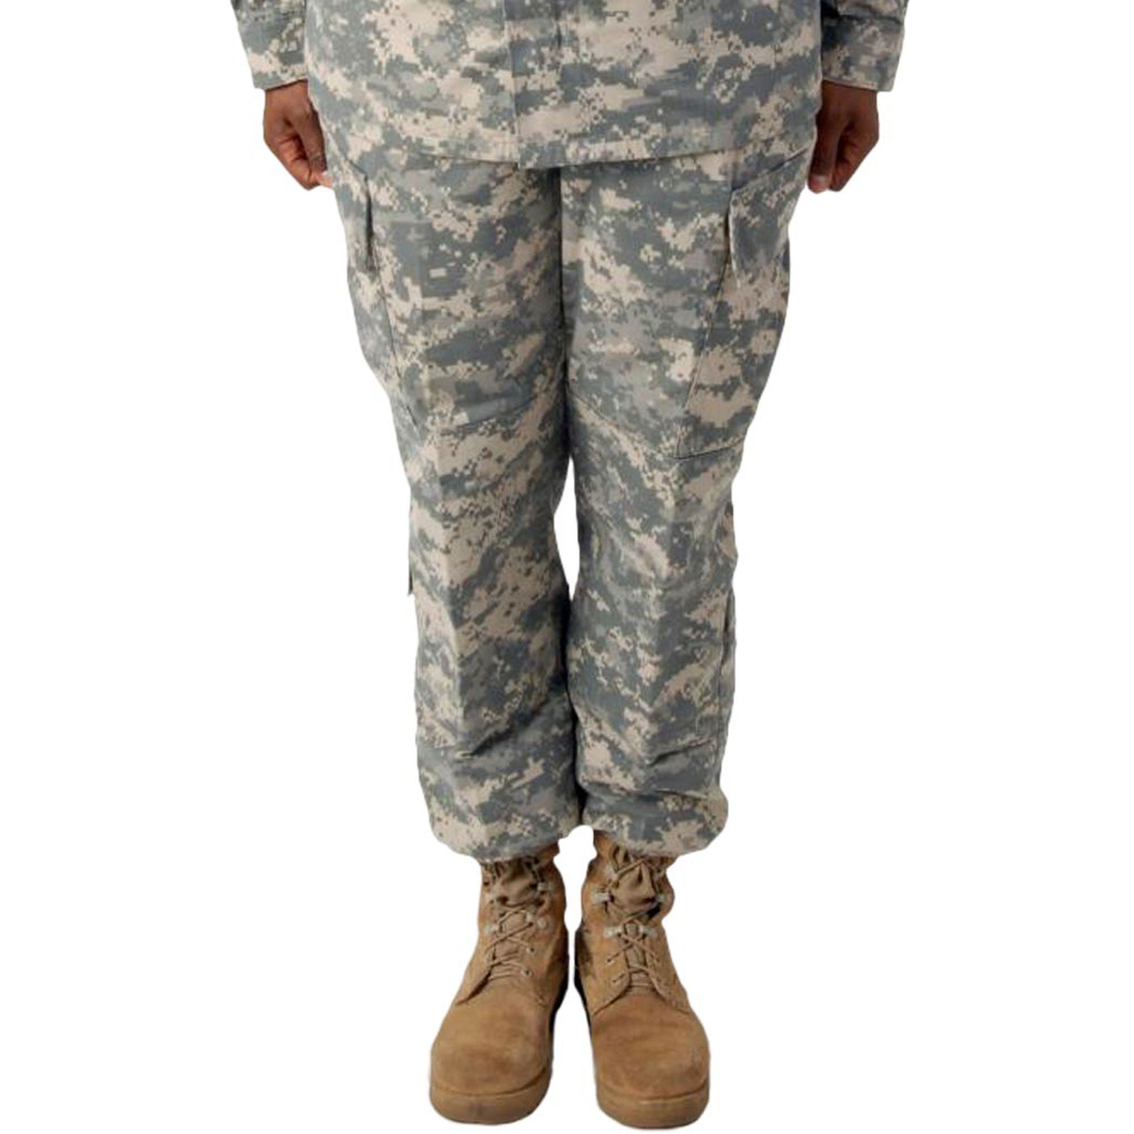 Army Uniform Sizing Chart